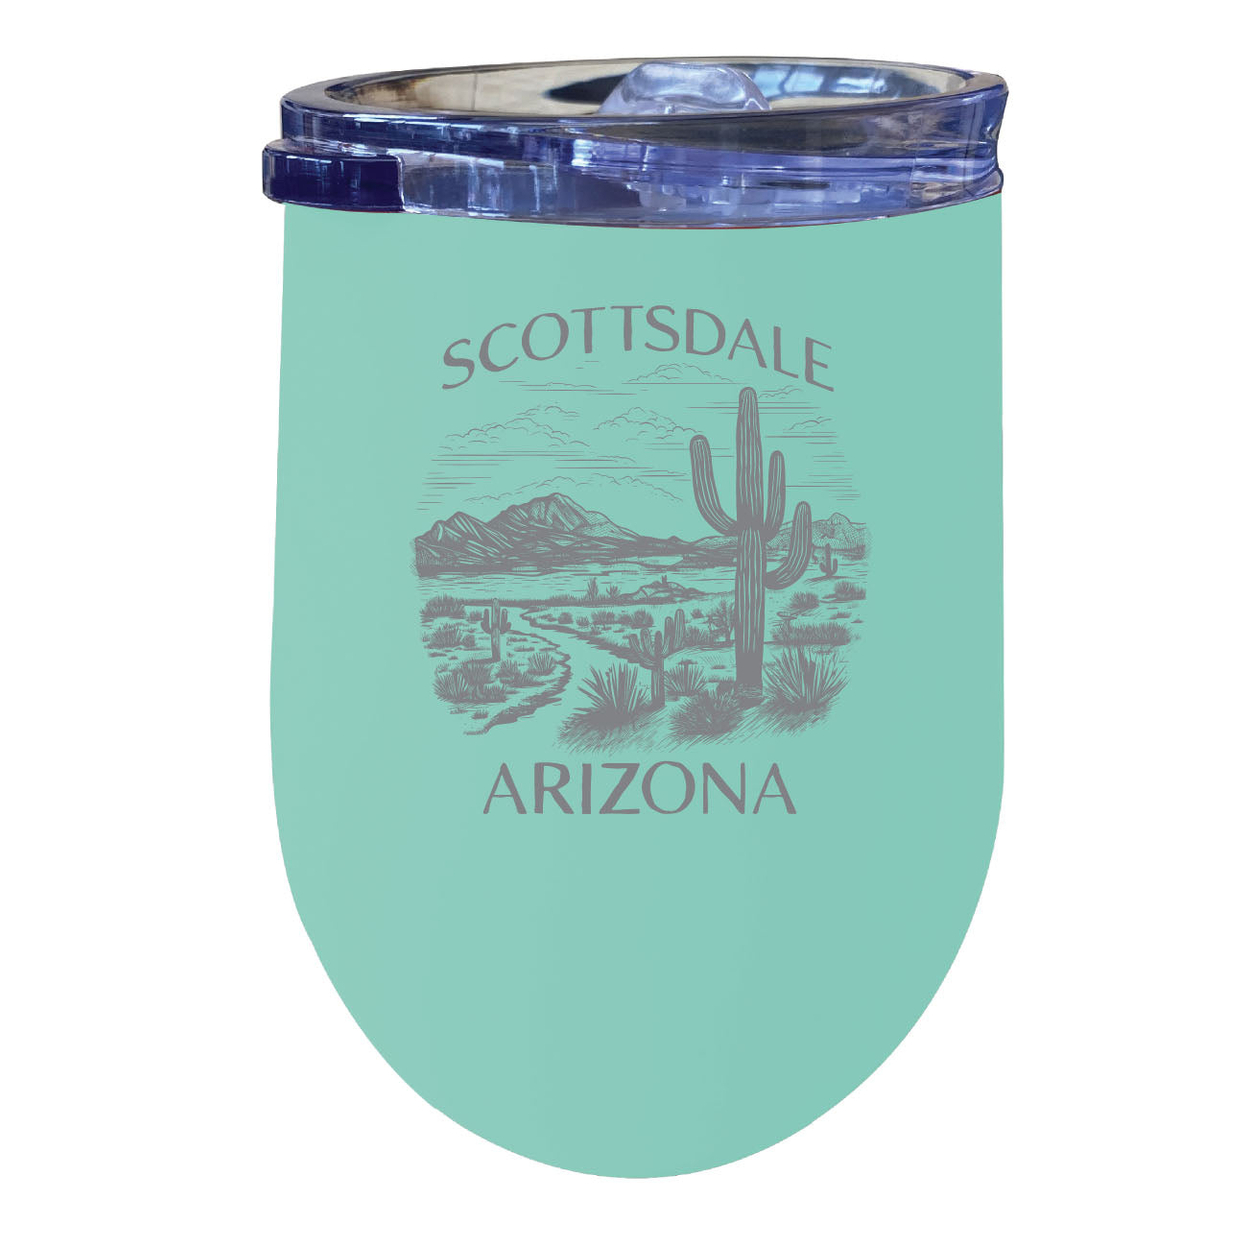 Scottsdale Arizona Souvenir 12 Oz Engraved Insulated Wine Stainless Steel Tumbler - Seafoam,,Single Unit